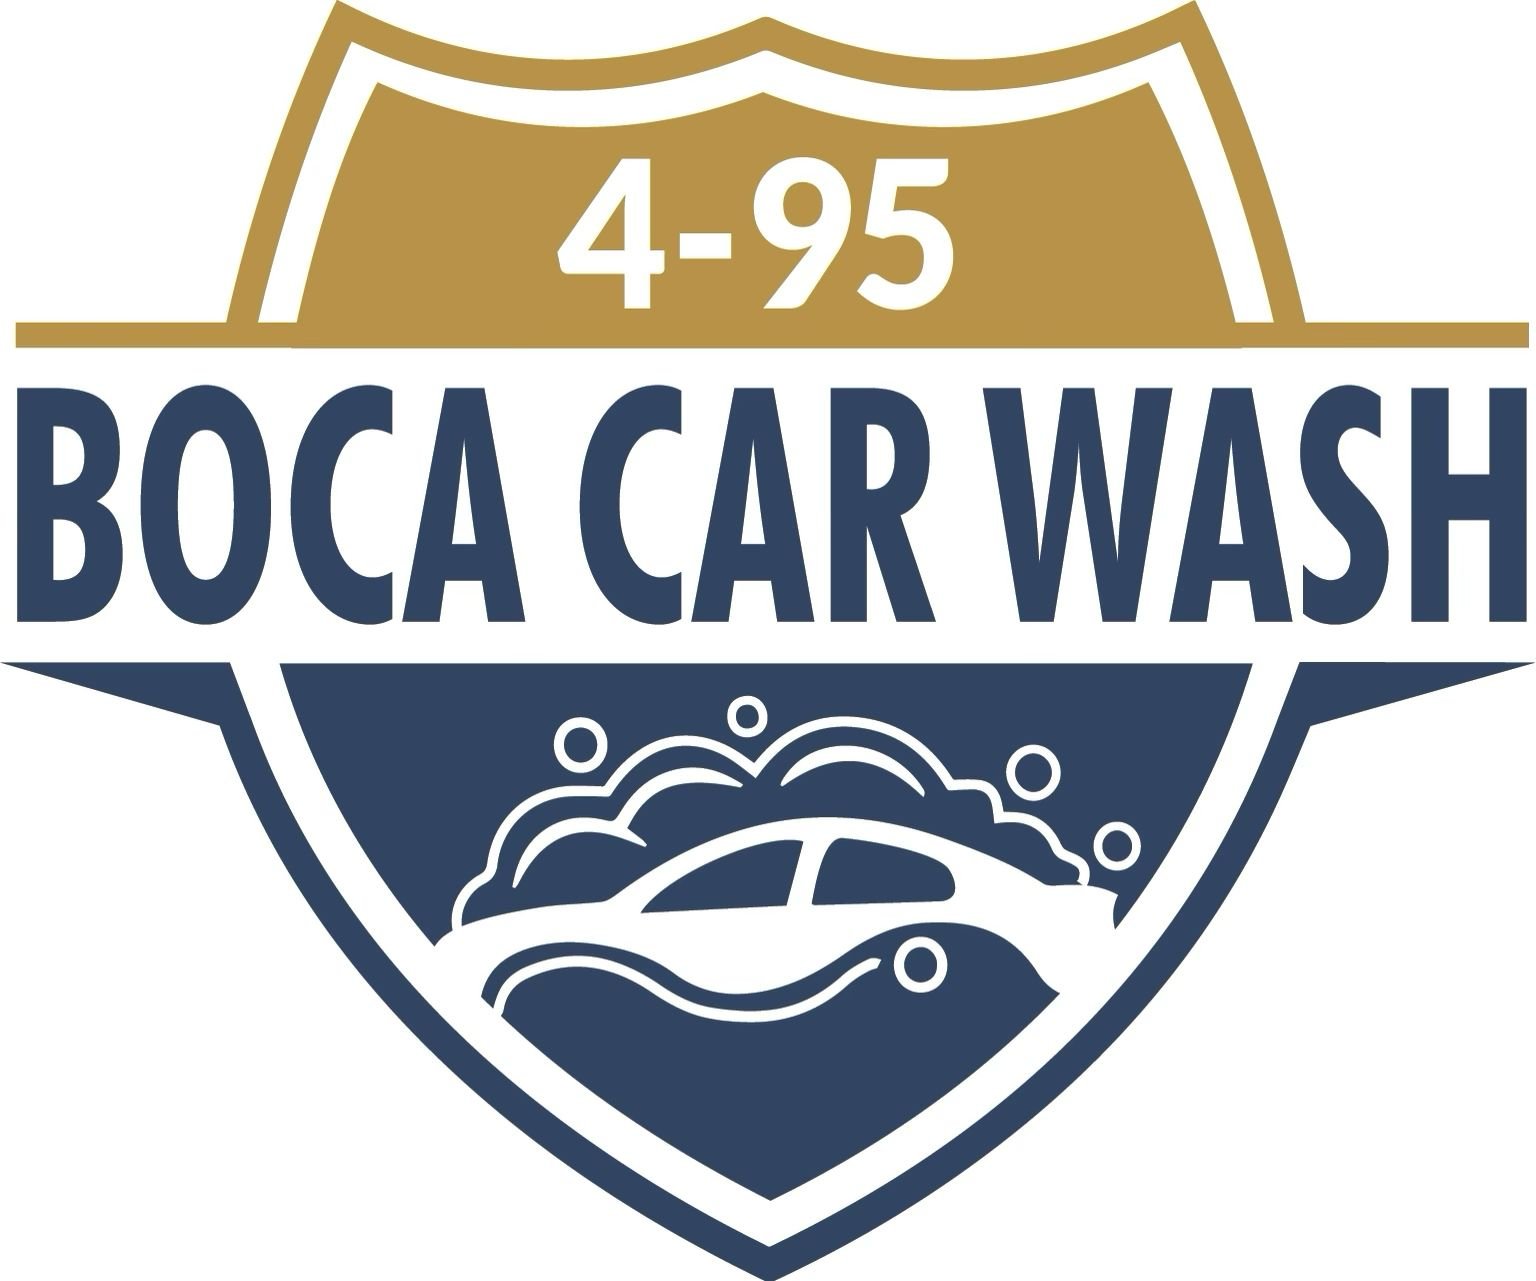 Boca Car Wash 4-95